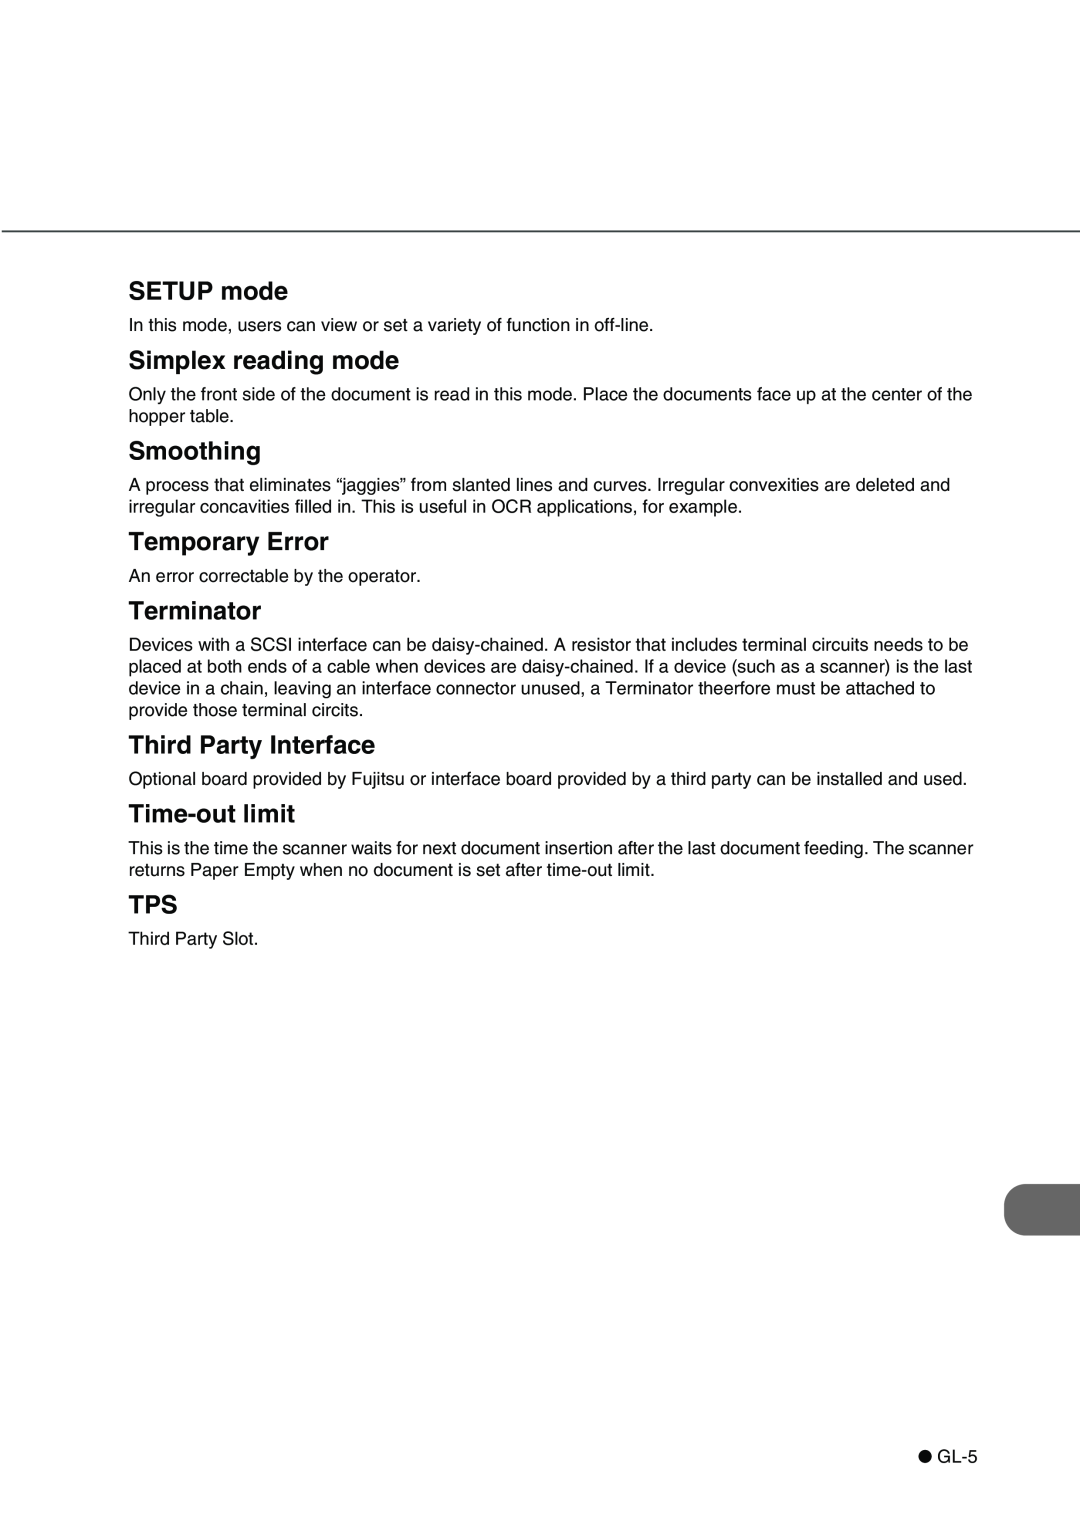 Fujitsu fi-4340C manual SETUP mode, Simplex reading mode, Smoothing, Temporary Error, Terminator, Third Party Interface 